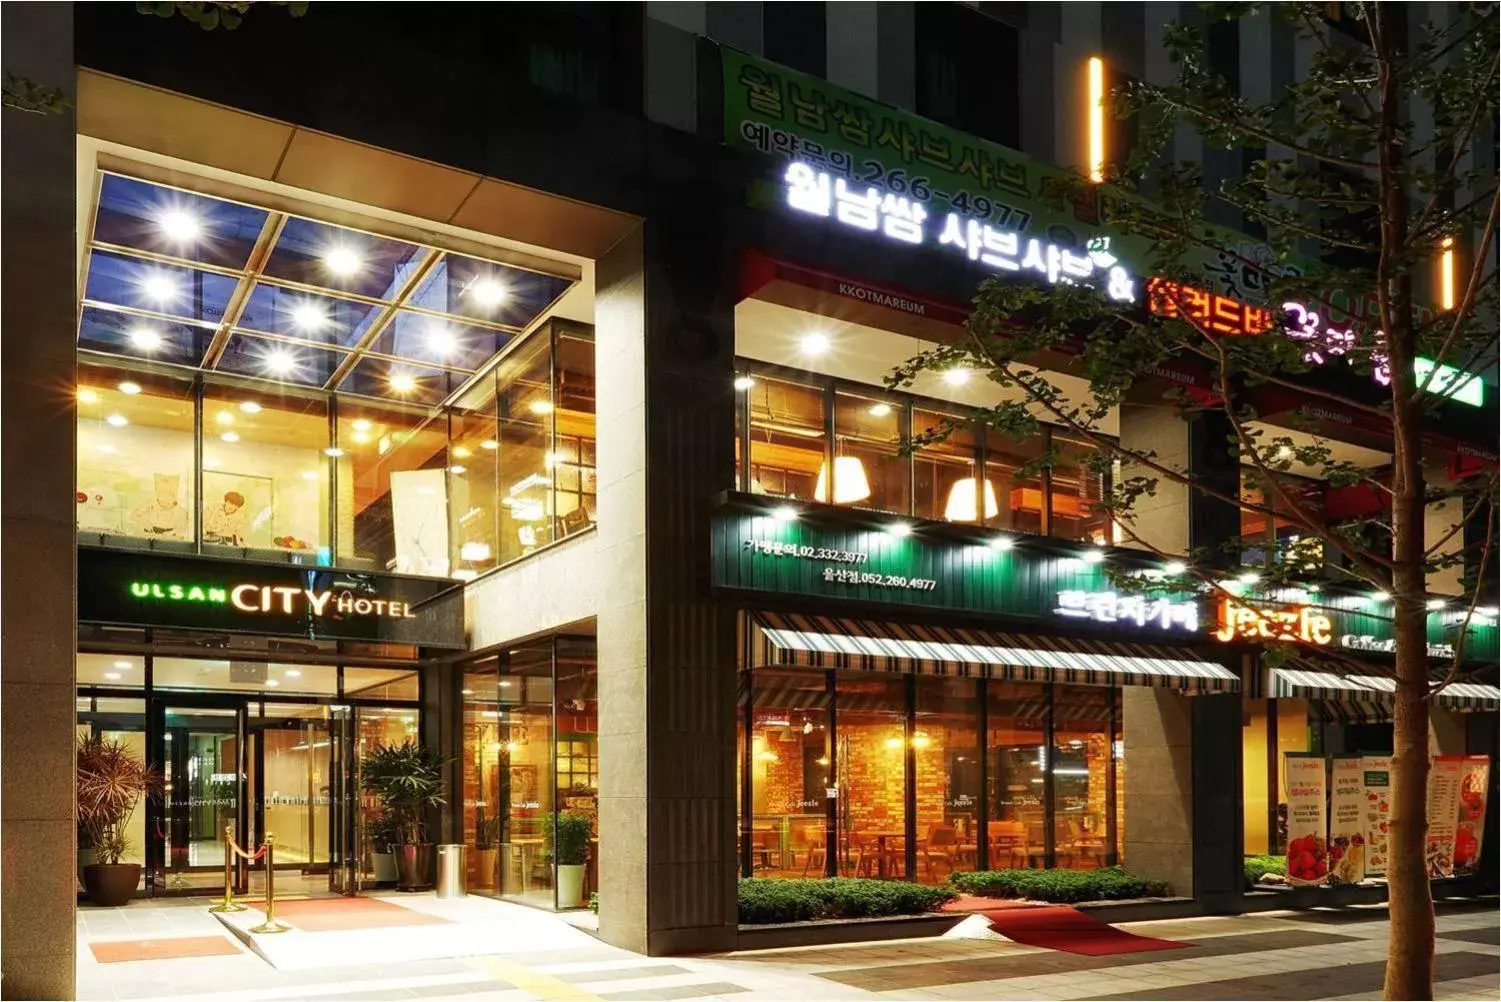 Facade/entrance, Property Building in Ulsan City Hotel